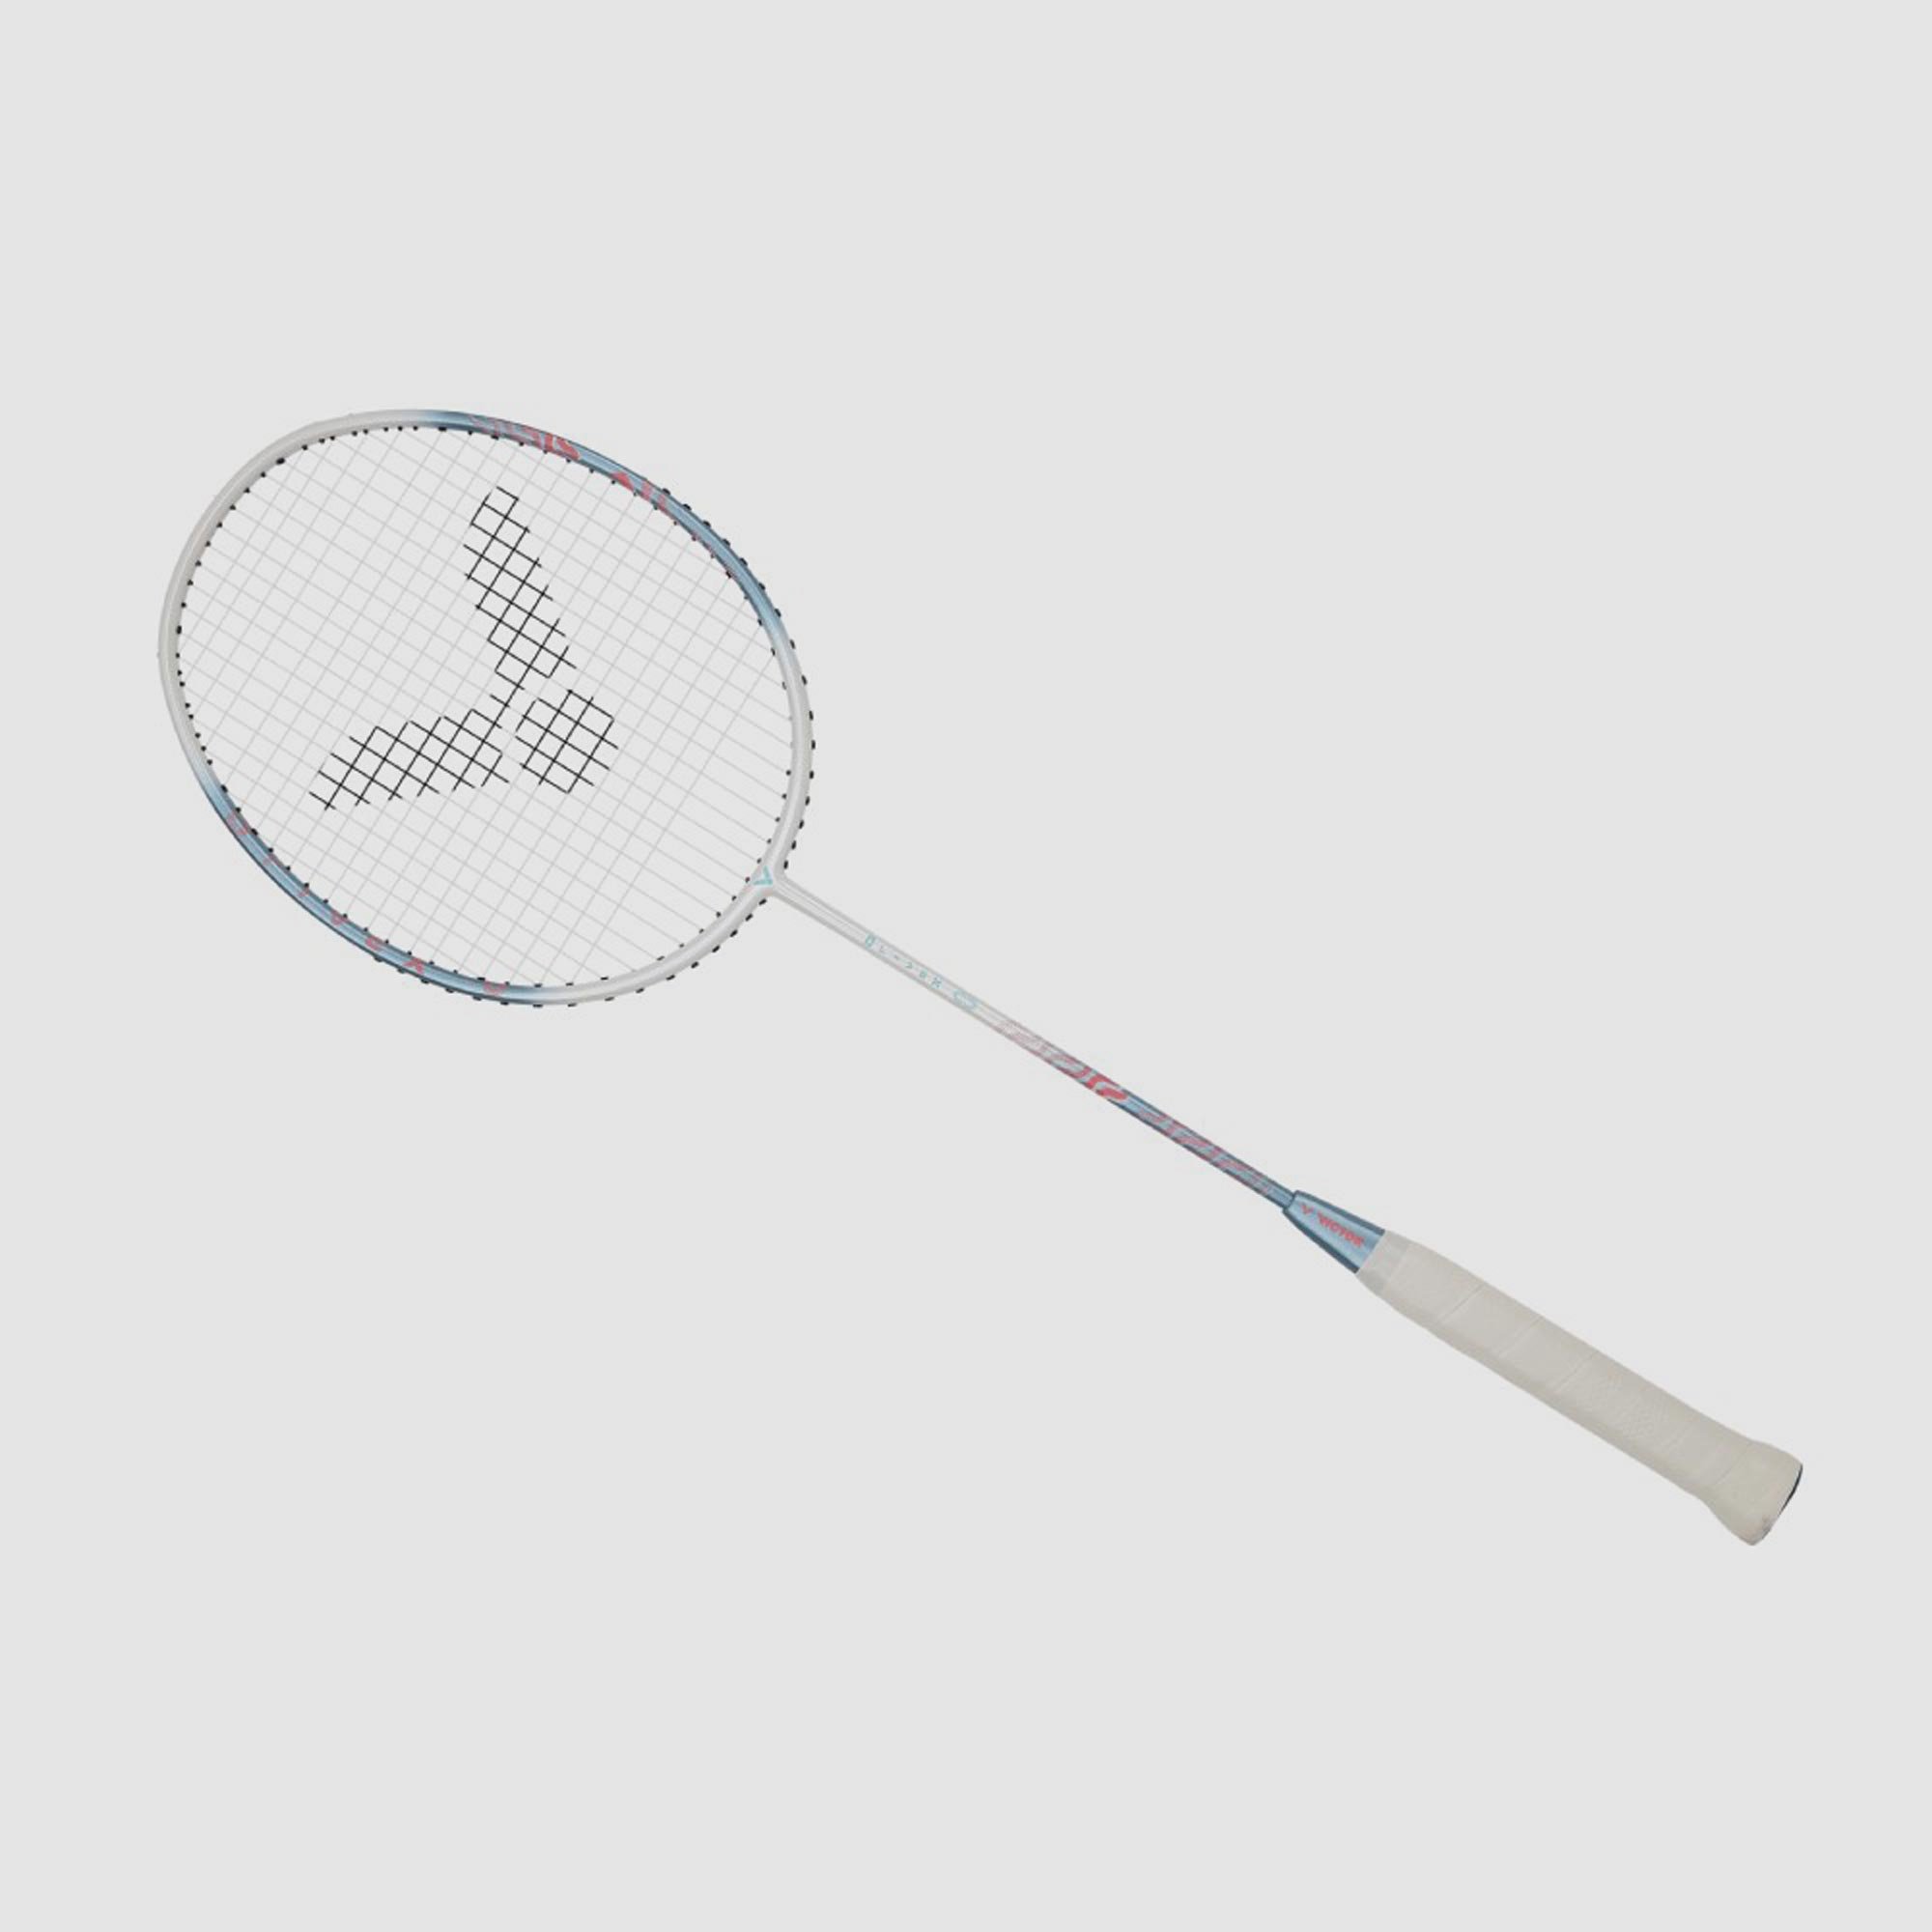 Victor DriveX 0 Badminton Racquet White/Blue 4U/G5